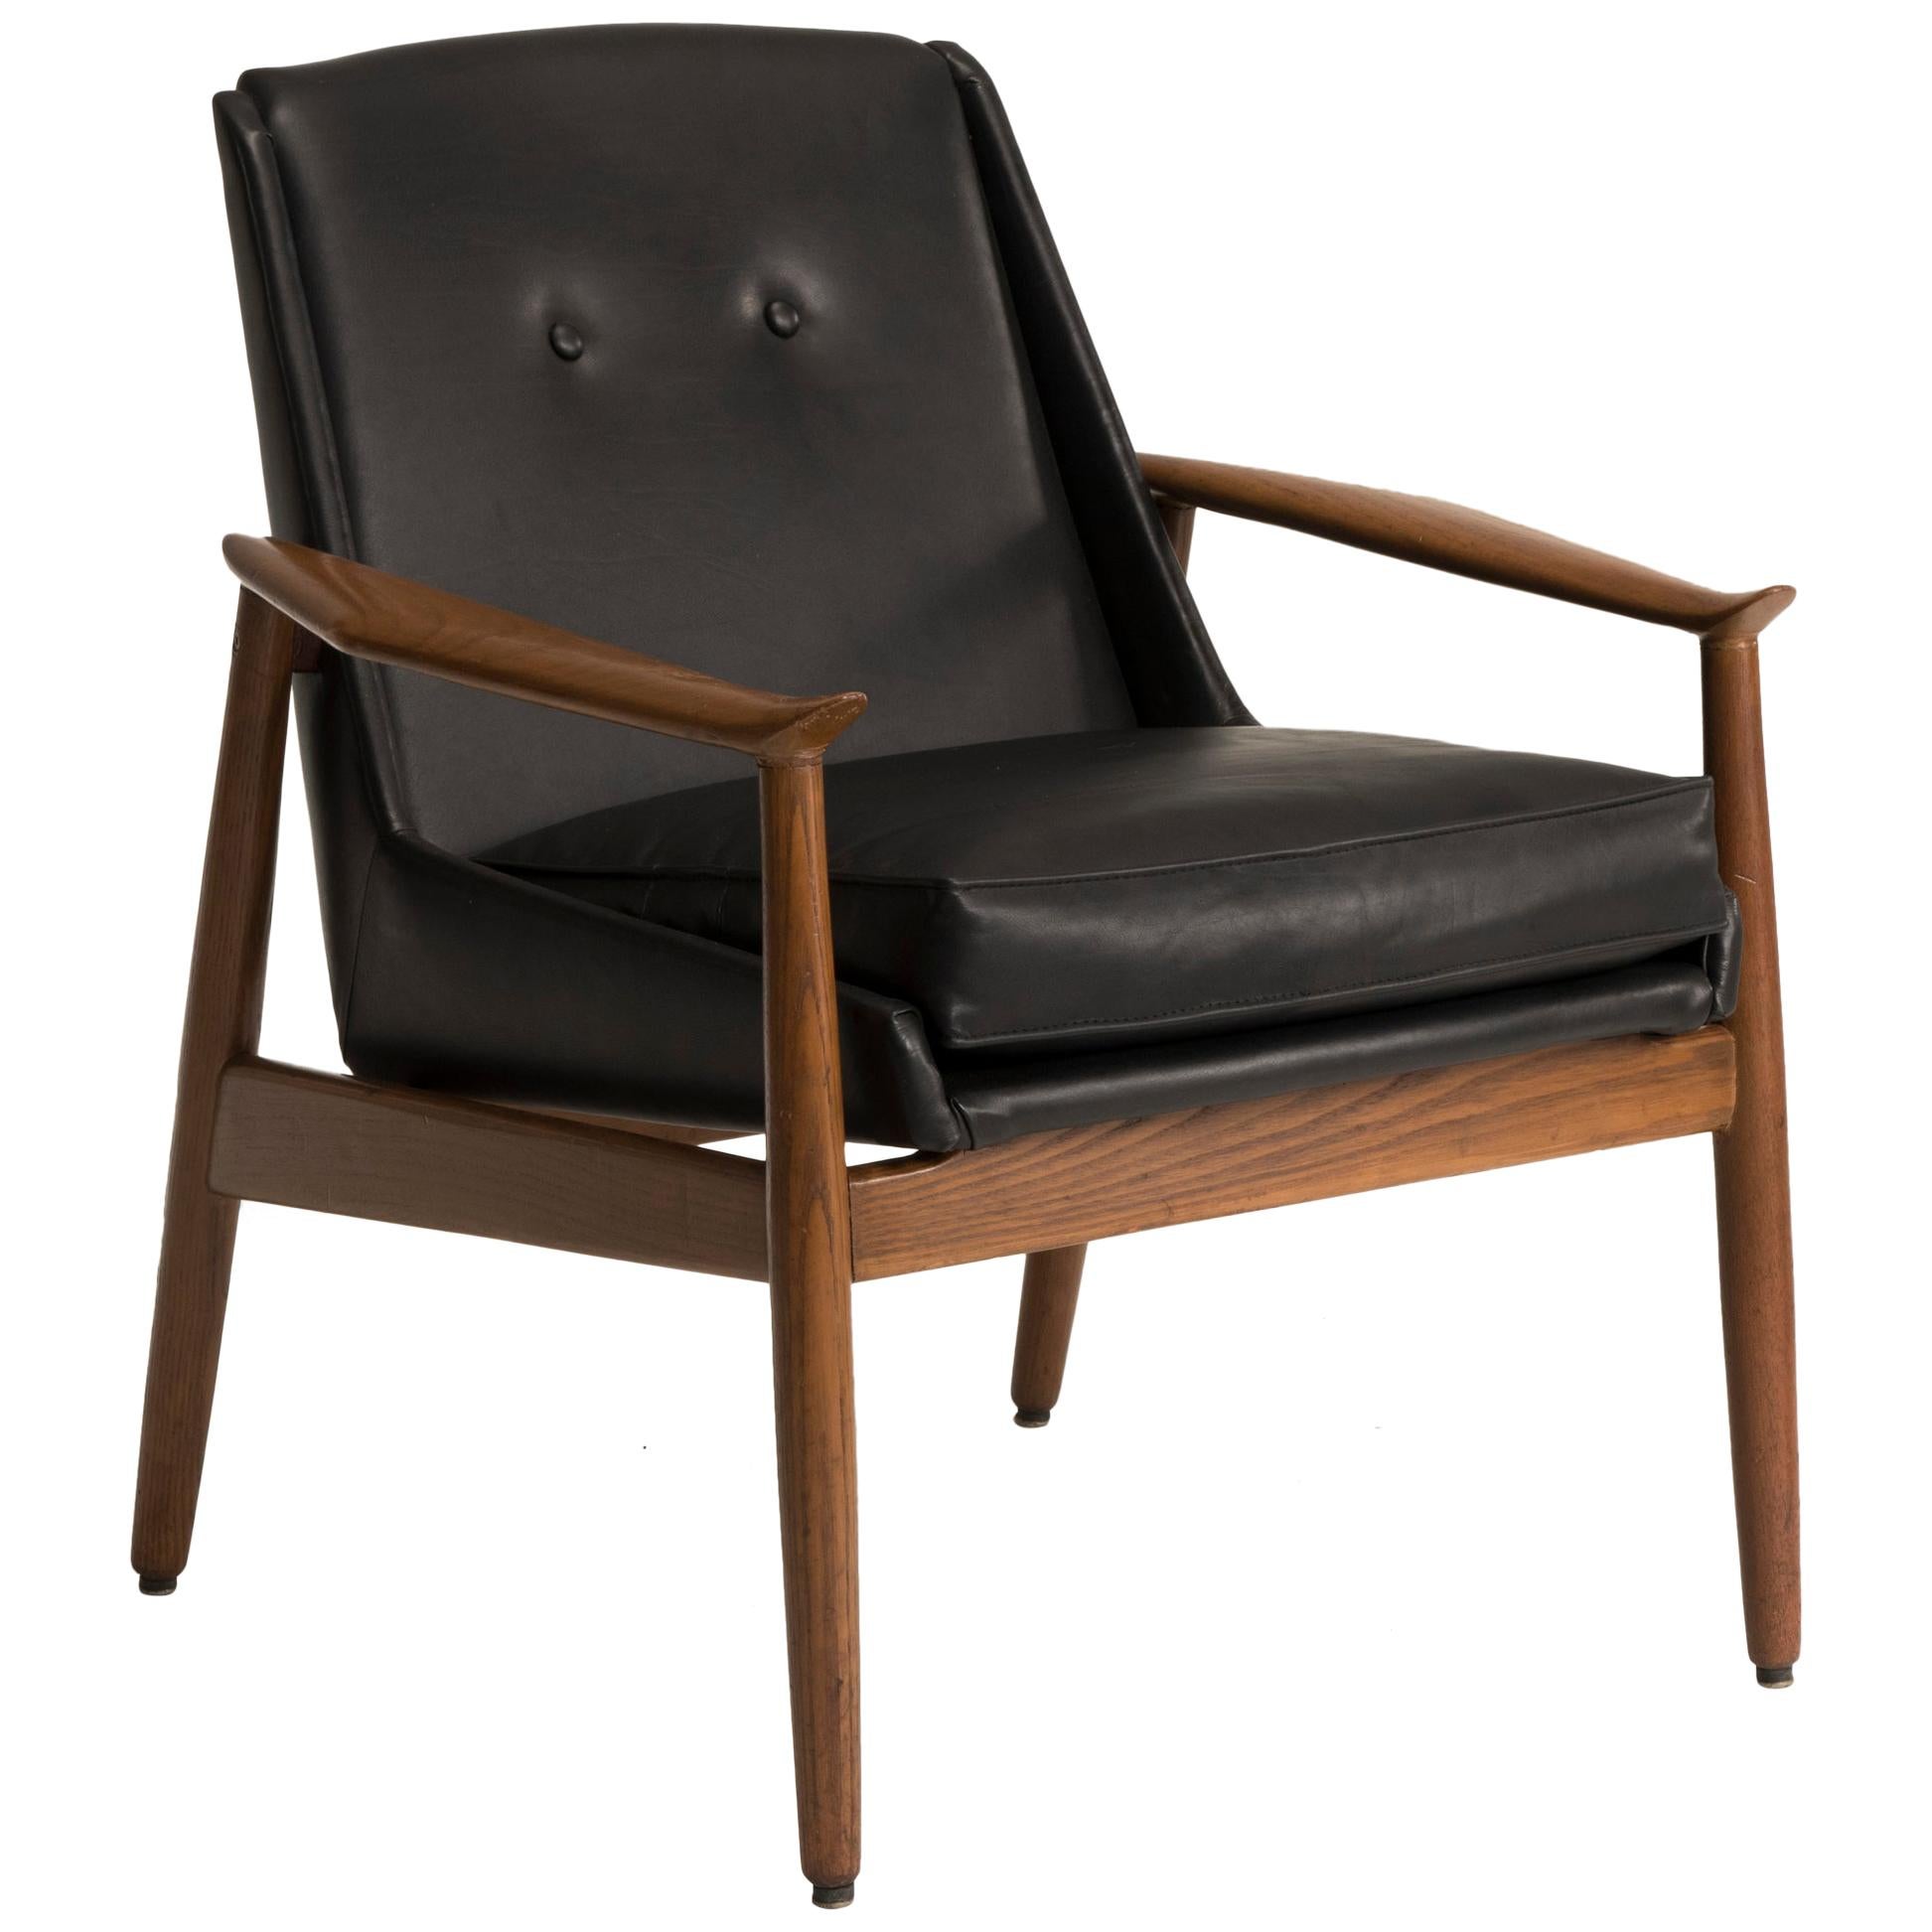 Italian Black Leather Walnut Wood Armchair, by Pizzetti 1950s For Sale